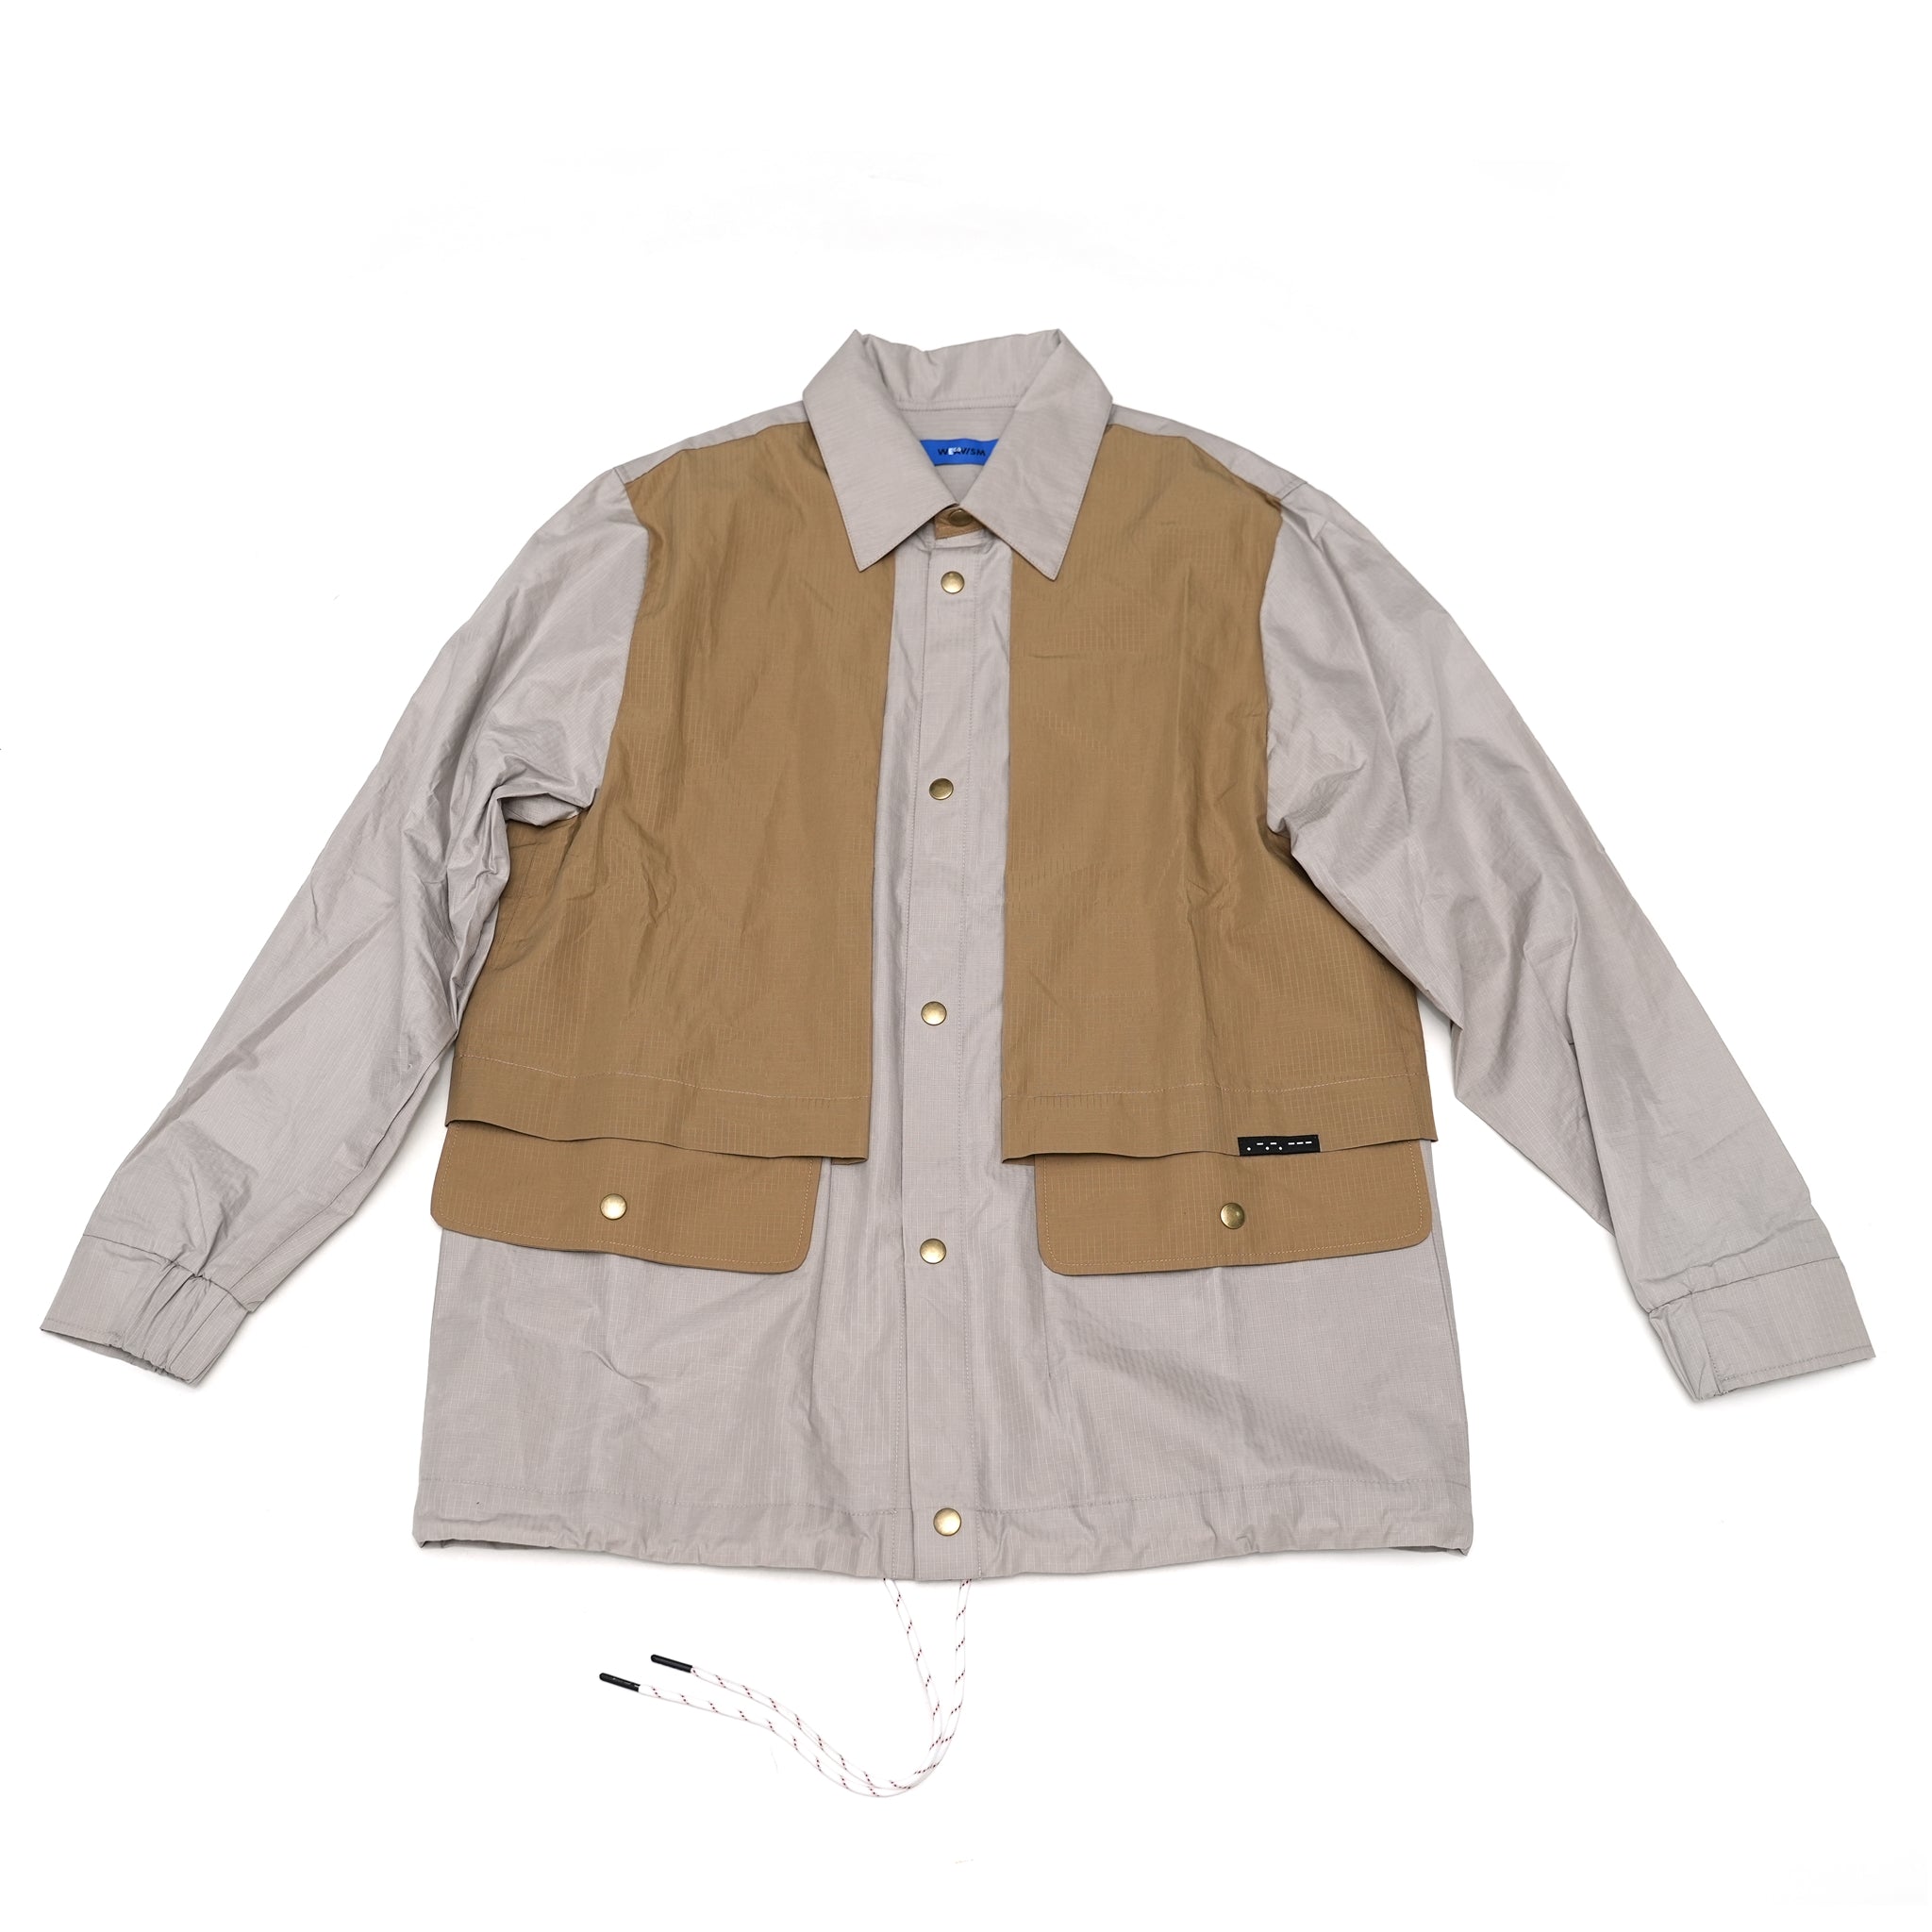 No:WDM16E0121A | Name:Double Flap Jacket | Color:Light Gray